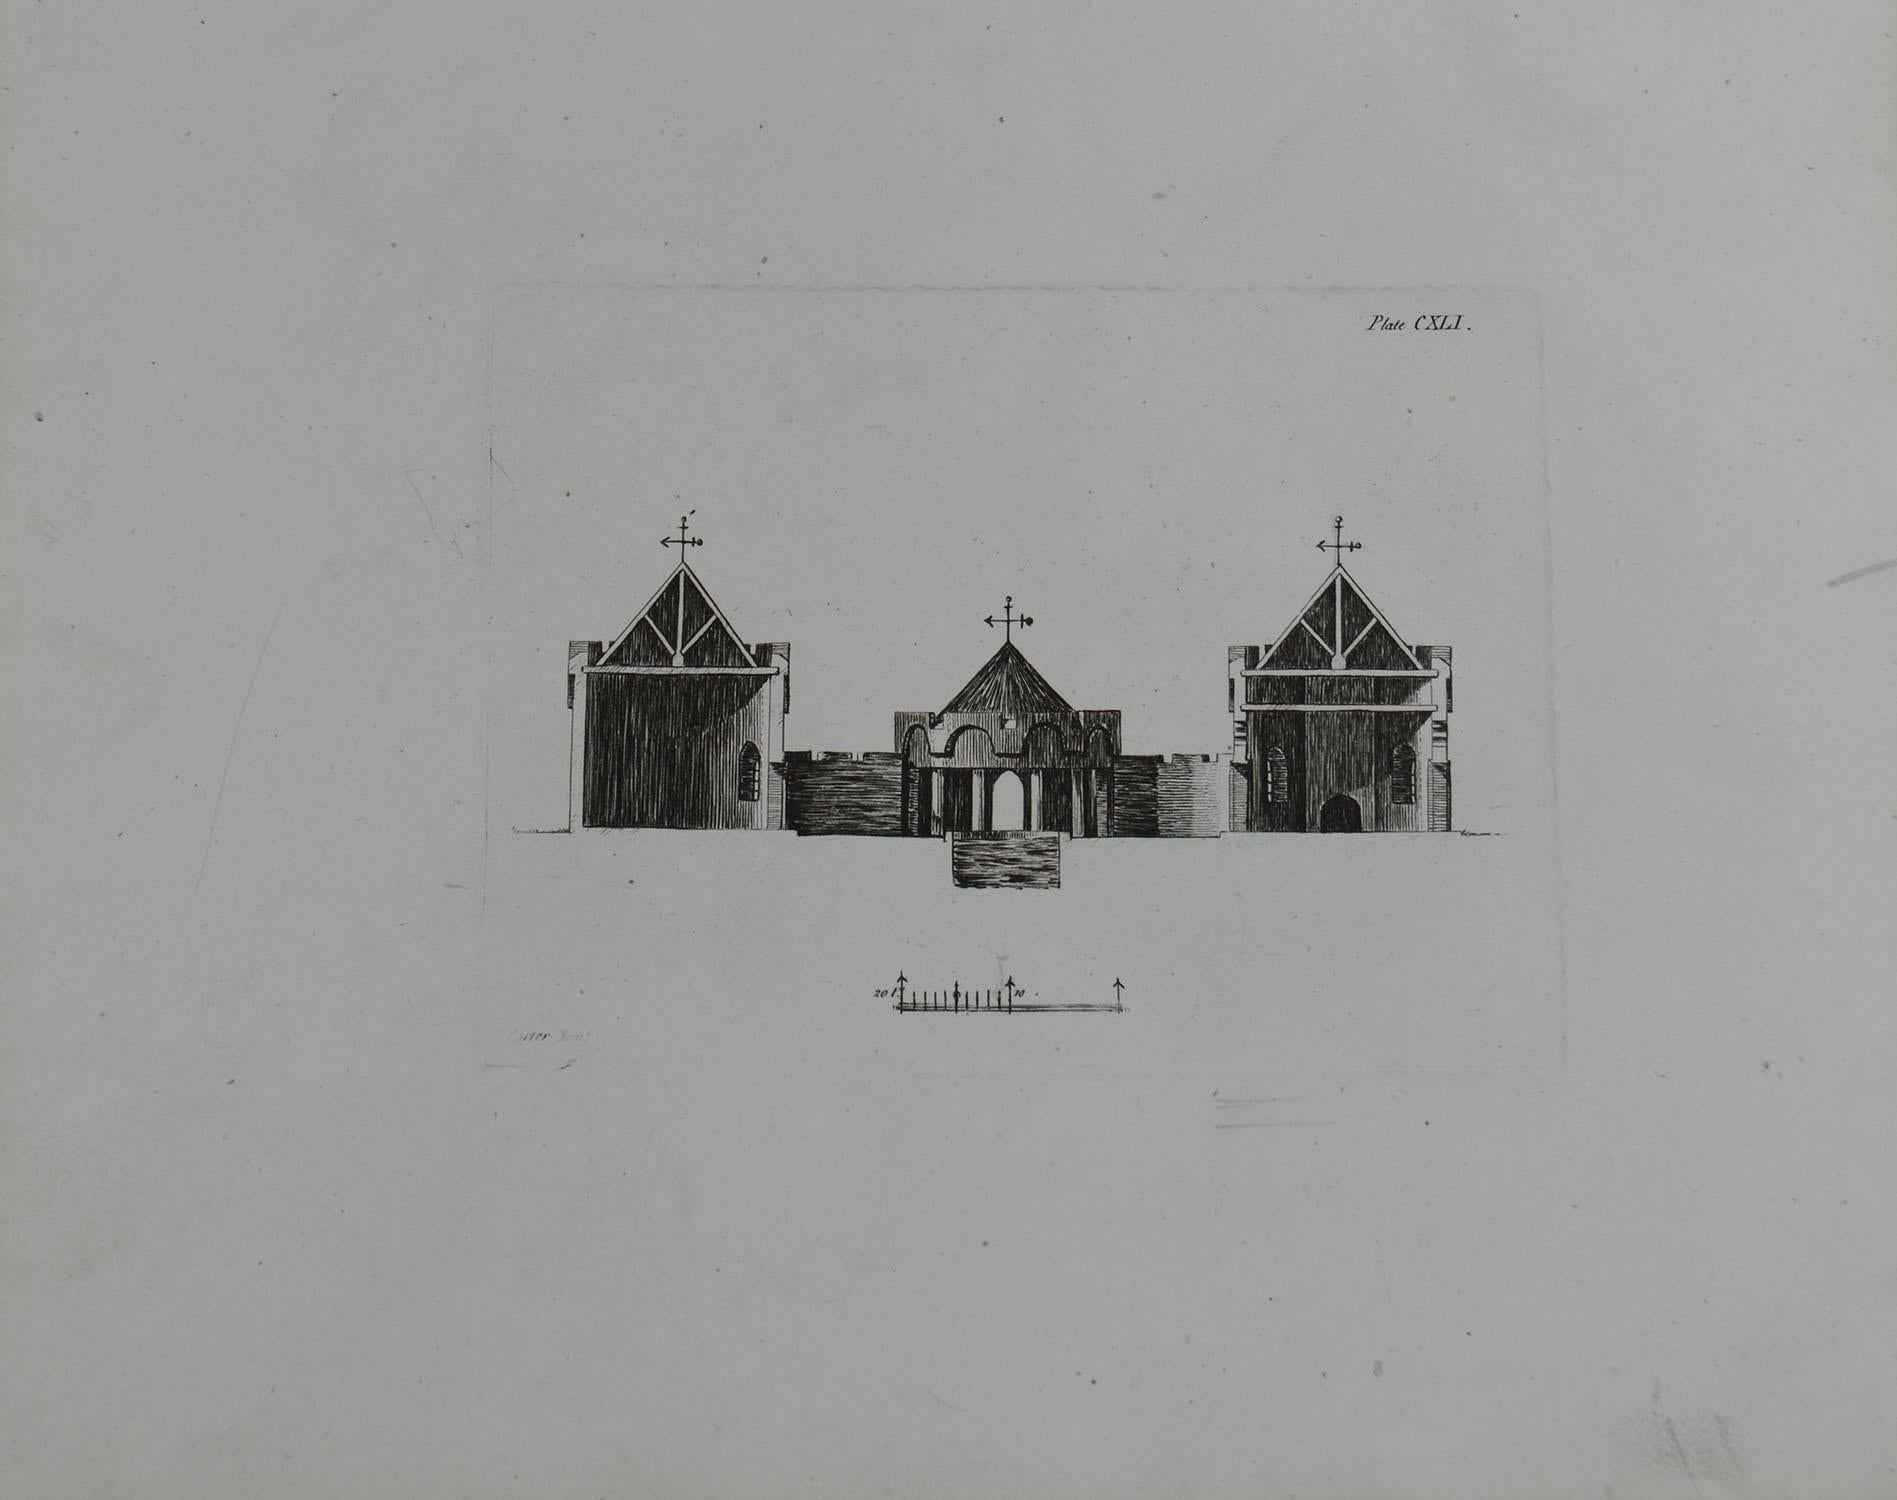 Paper Set of 12 Original Antique Architectural Prints, A.G. Cook, circa 1820